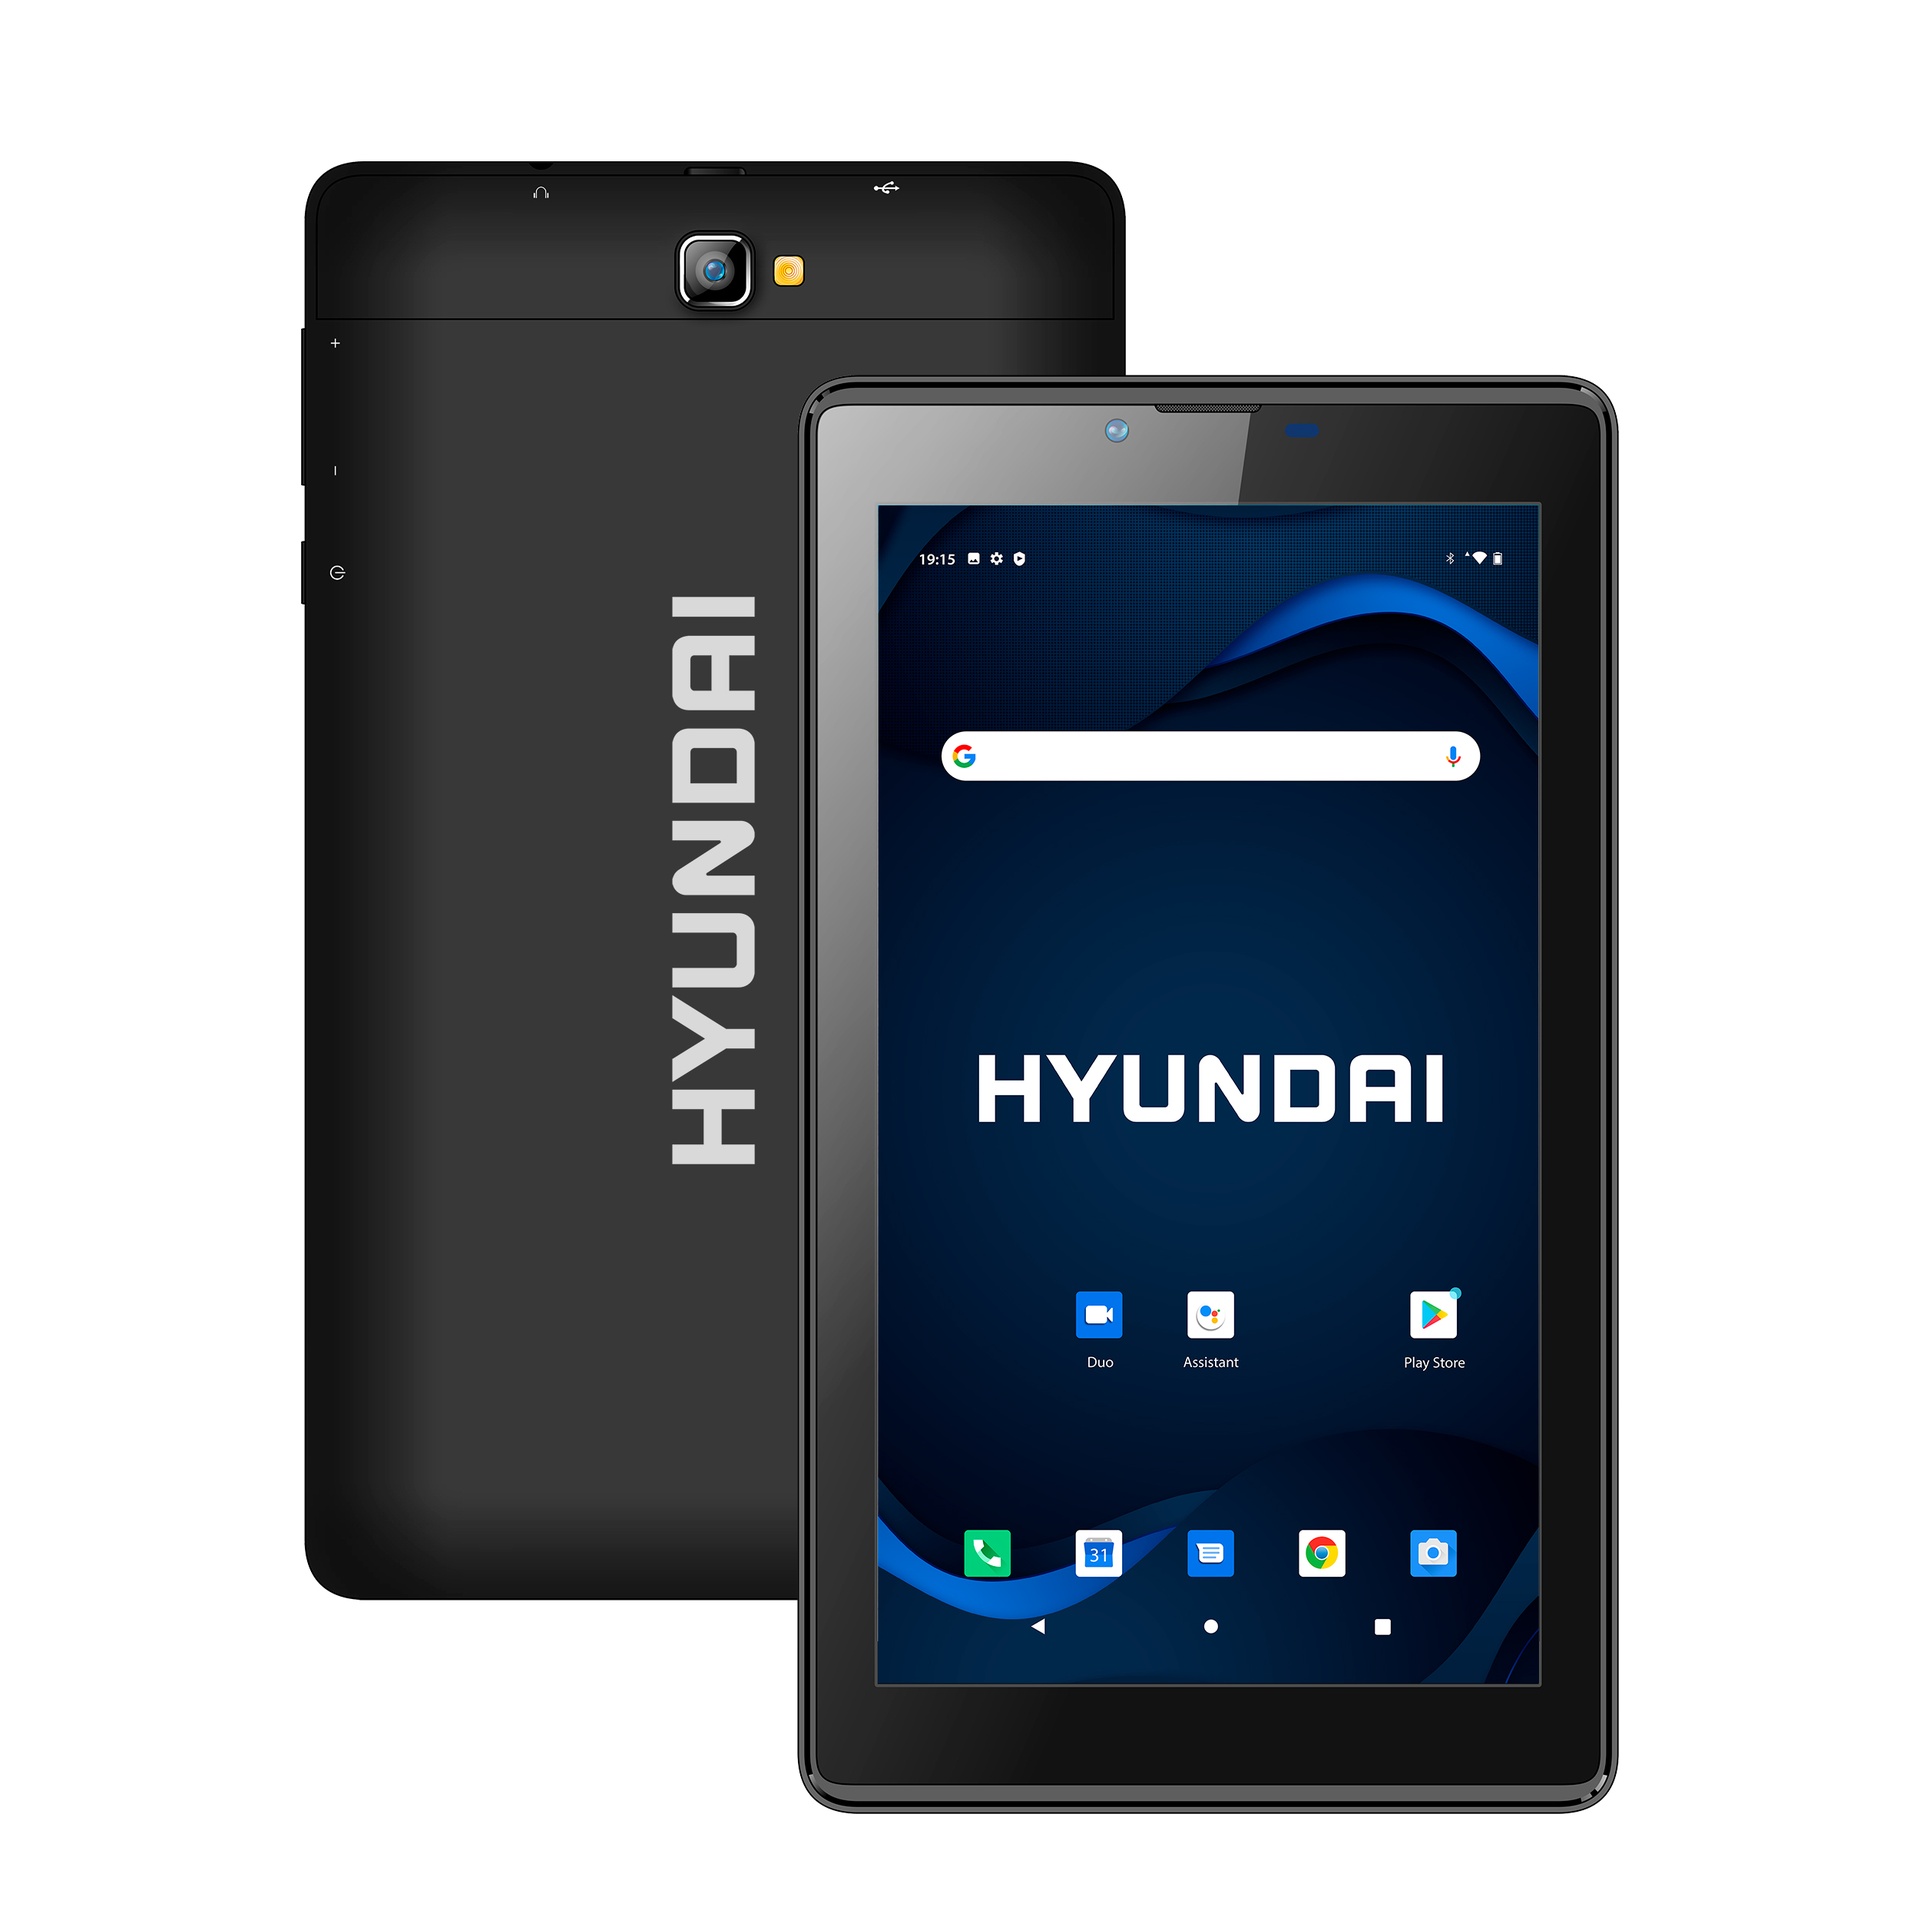 Hyundai HyTab 7GB1, 7" Tablet, 1024x600 IPS, Android 10 GO edition, Quad-Core Processor, 1GB RAM, 16GB Storage, 2MP/2MP, 3G - Black HT7GB1MBK_B UPC  - HT7GB1MBK_B